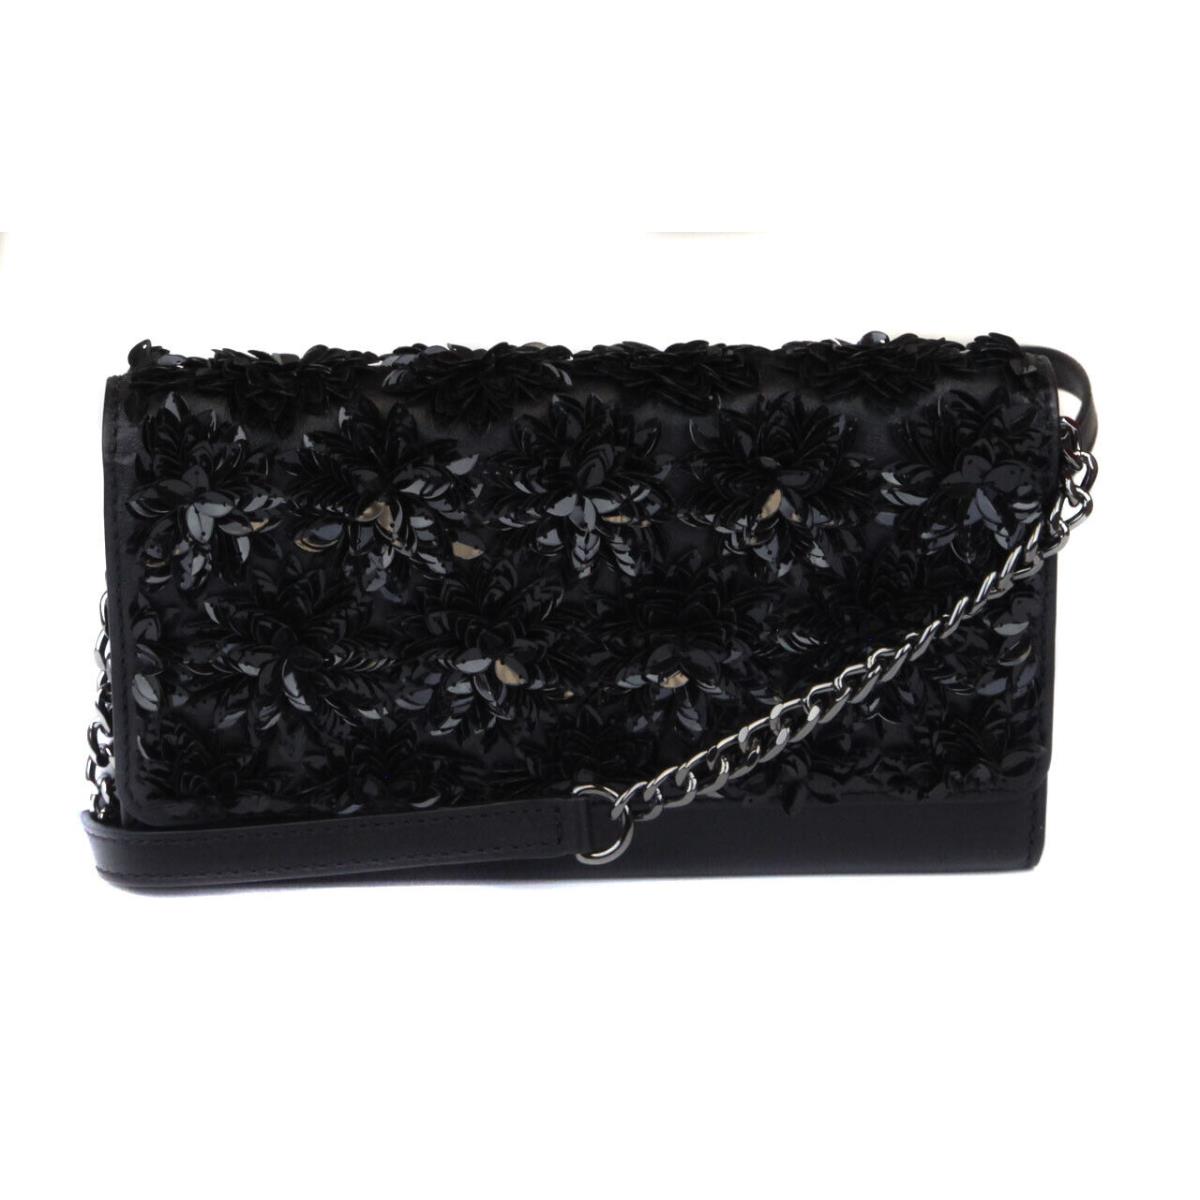 Michael Kors Women Leather Black Floral Burst Sequin Crossbody Purse Bag Handbag